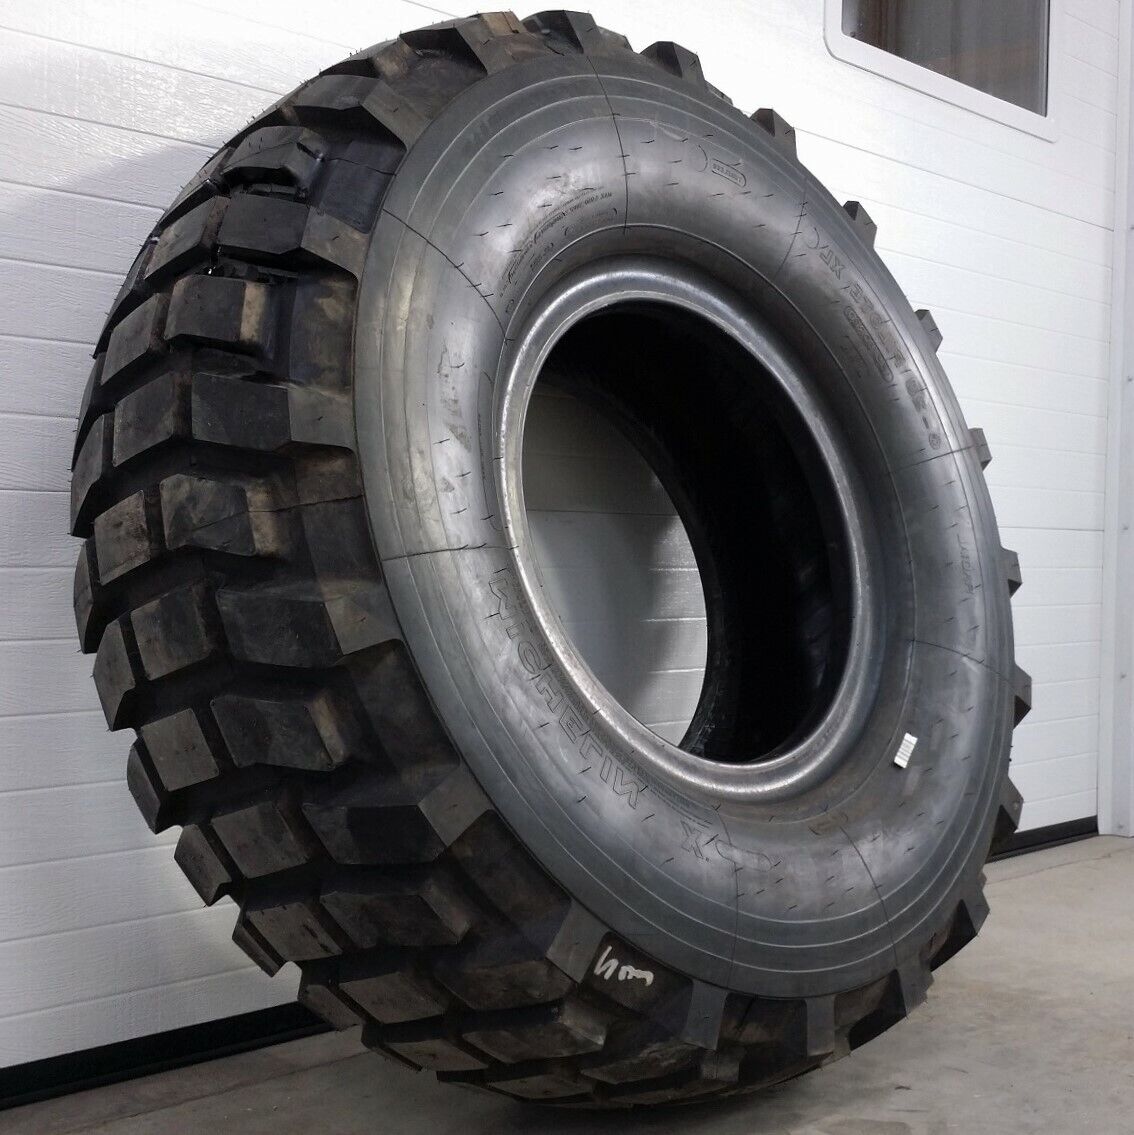 Michelin XL G-20 15.5/80R20 18-Ply Military M1076 Trailer Truck Tires 100% Tread